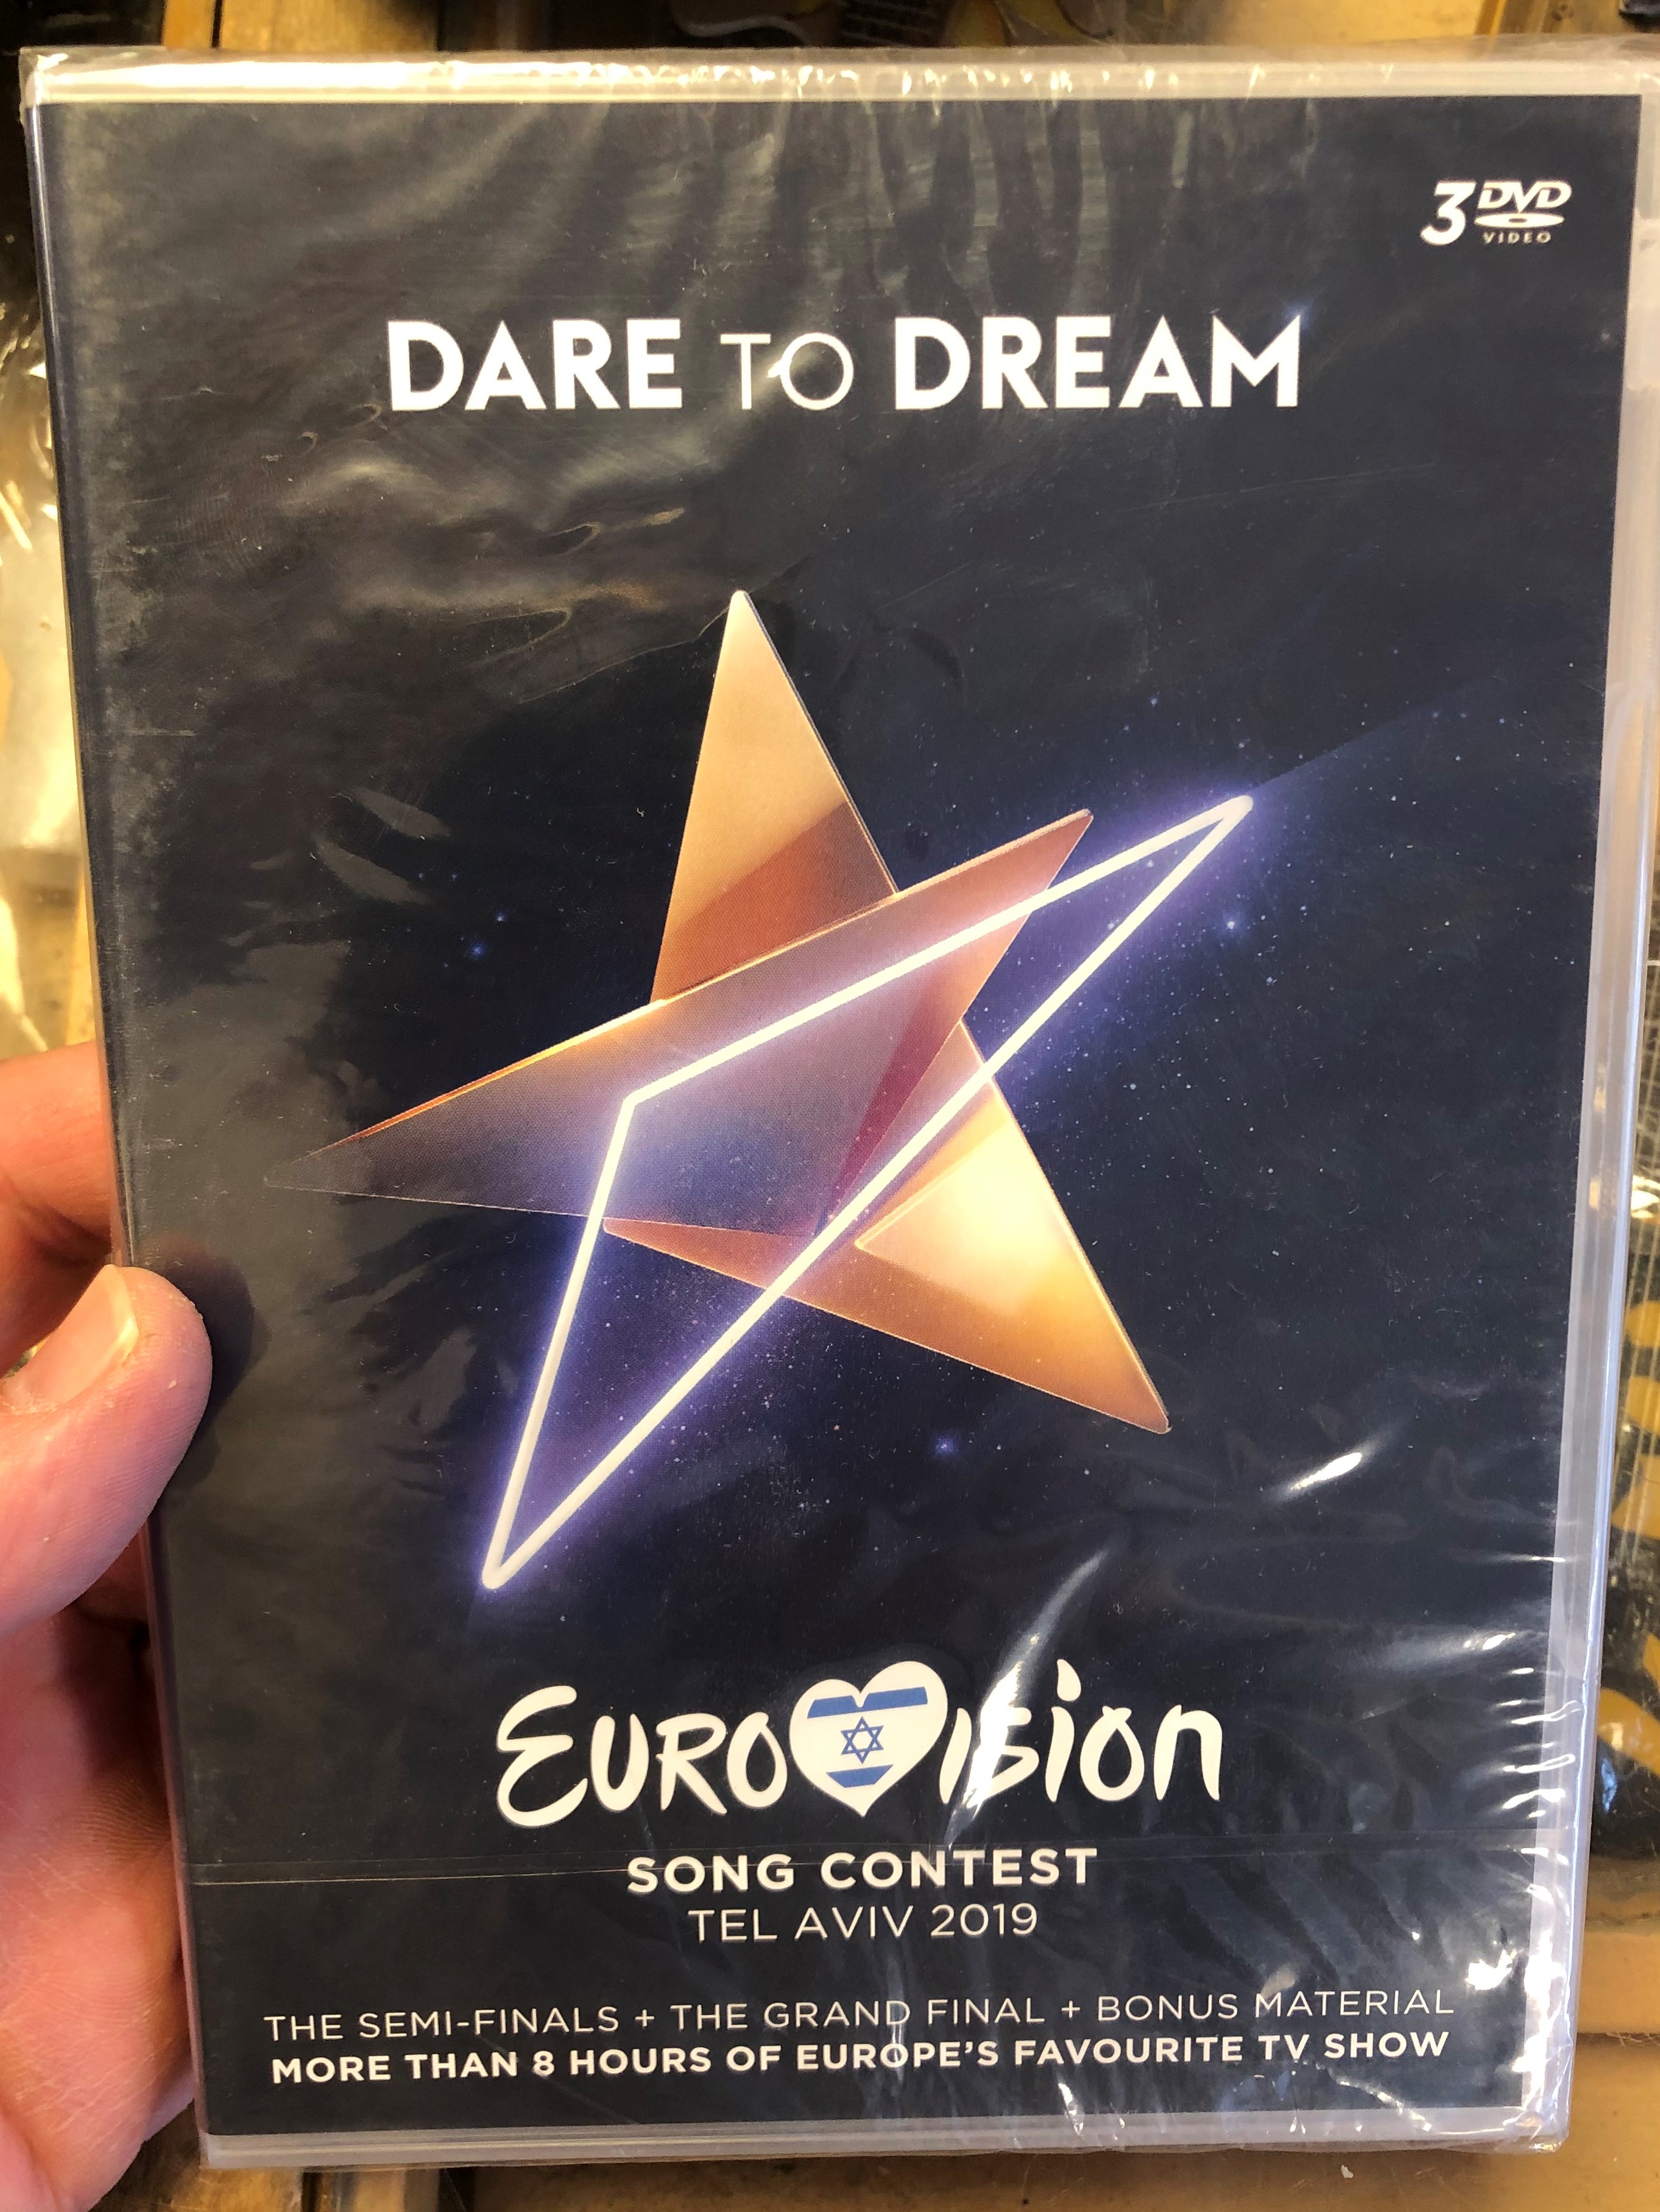 Dare to Dream 3DVD Eurovision Song Contest Tel Aviv 2019 / The Semi-Finals  - The Grand Final + Bonus / More than 8 Hours of Europe's favourite TV show  / UNI 7751454 - bibleinmylanguage